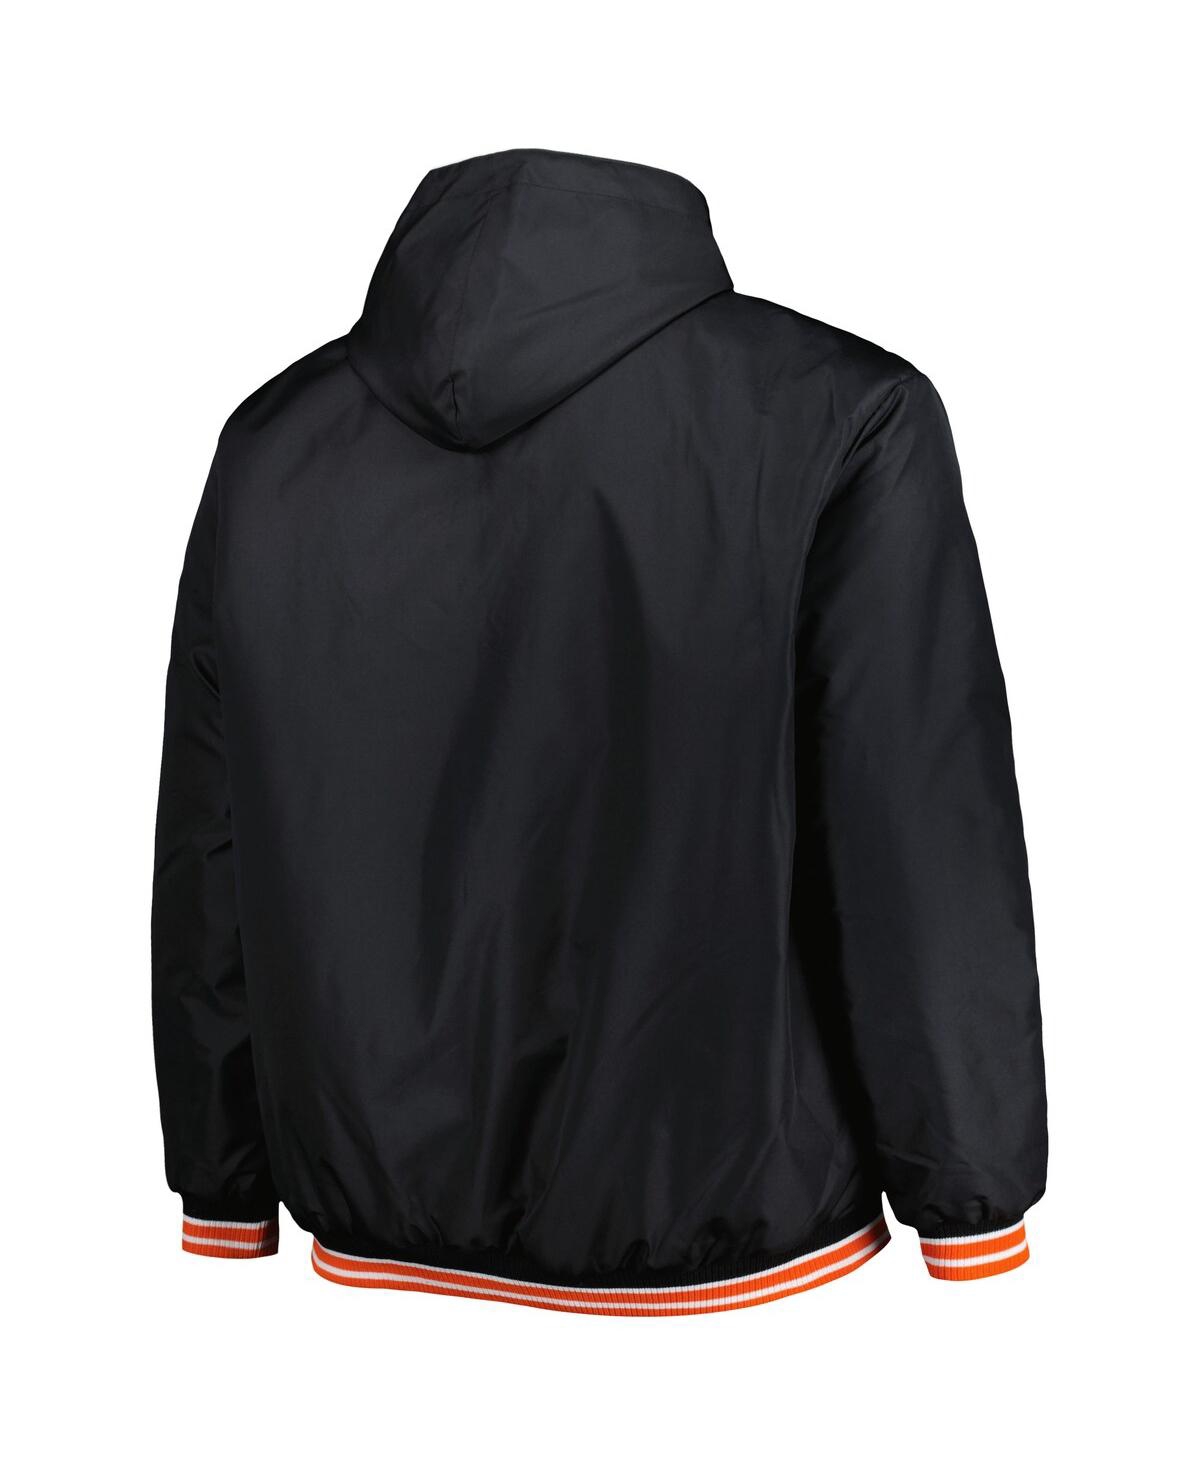 Shop Jh Design Men's  Black San Francisco Giants Reversible Fleece Full-snap Hoodie Jacket